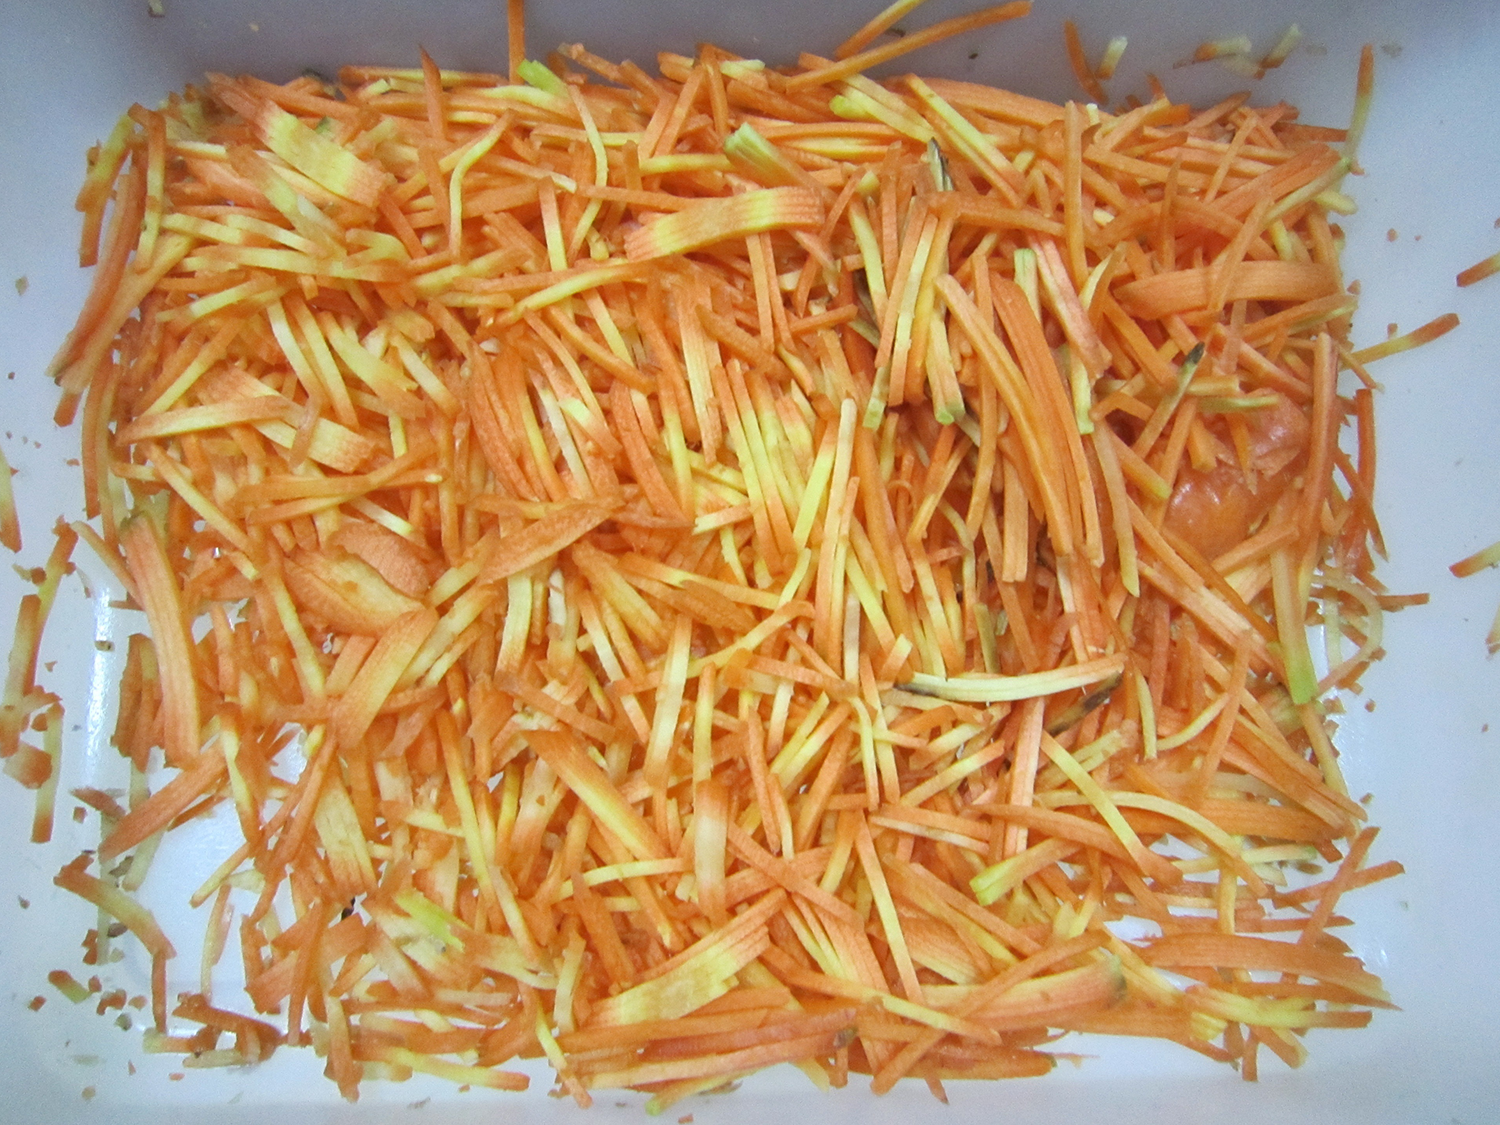 Carrot shredding machine